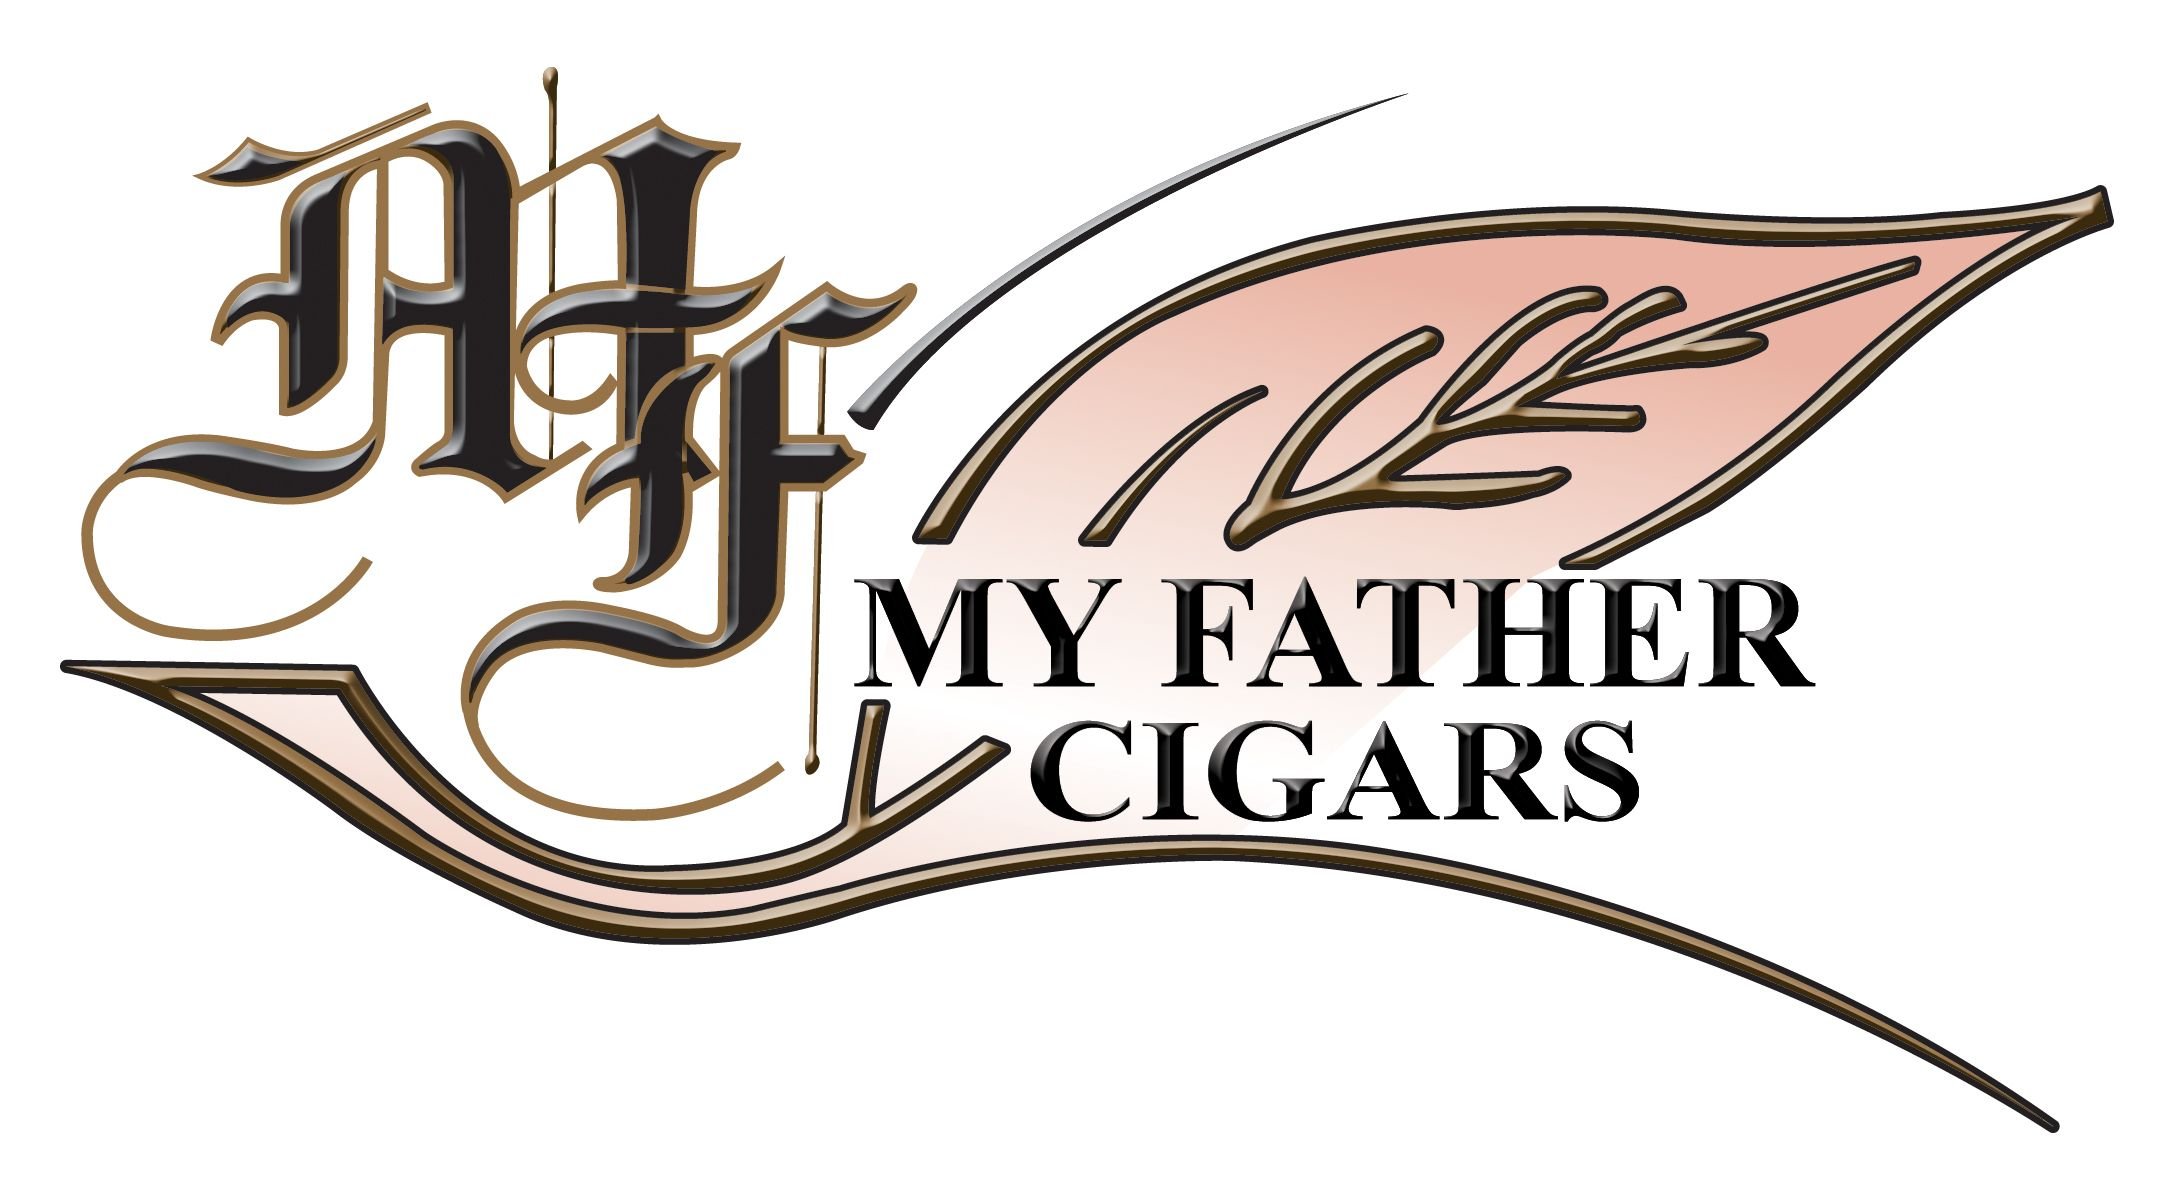 cigars, Cigarette, Tobacco, Bokeh, Smoke, Smoking, Cigar, Poster Wallpaper